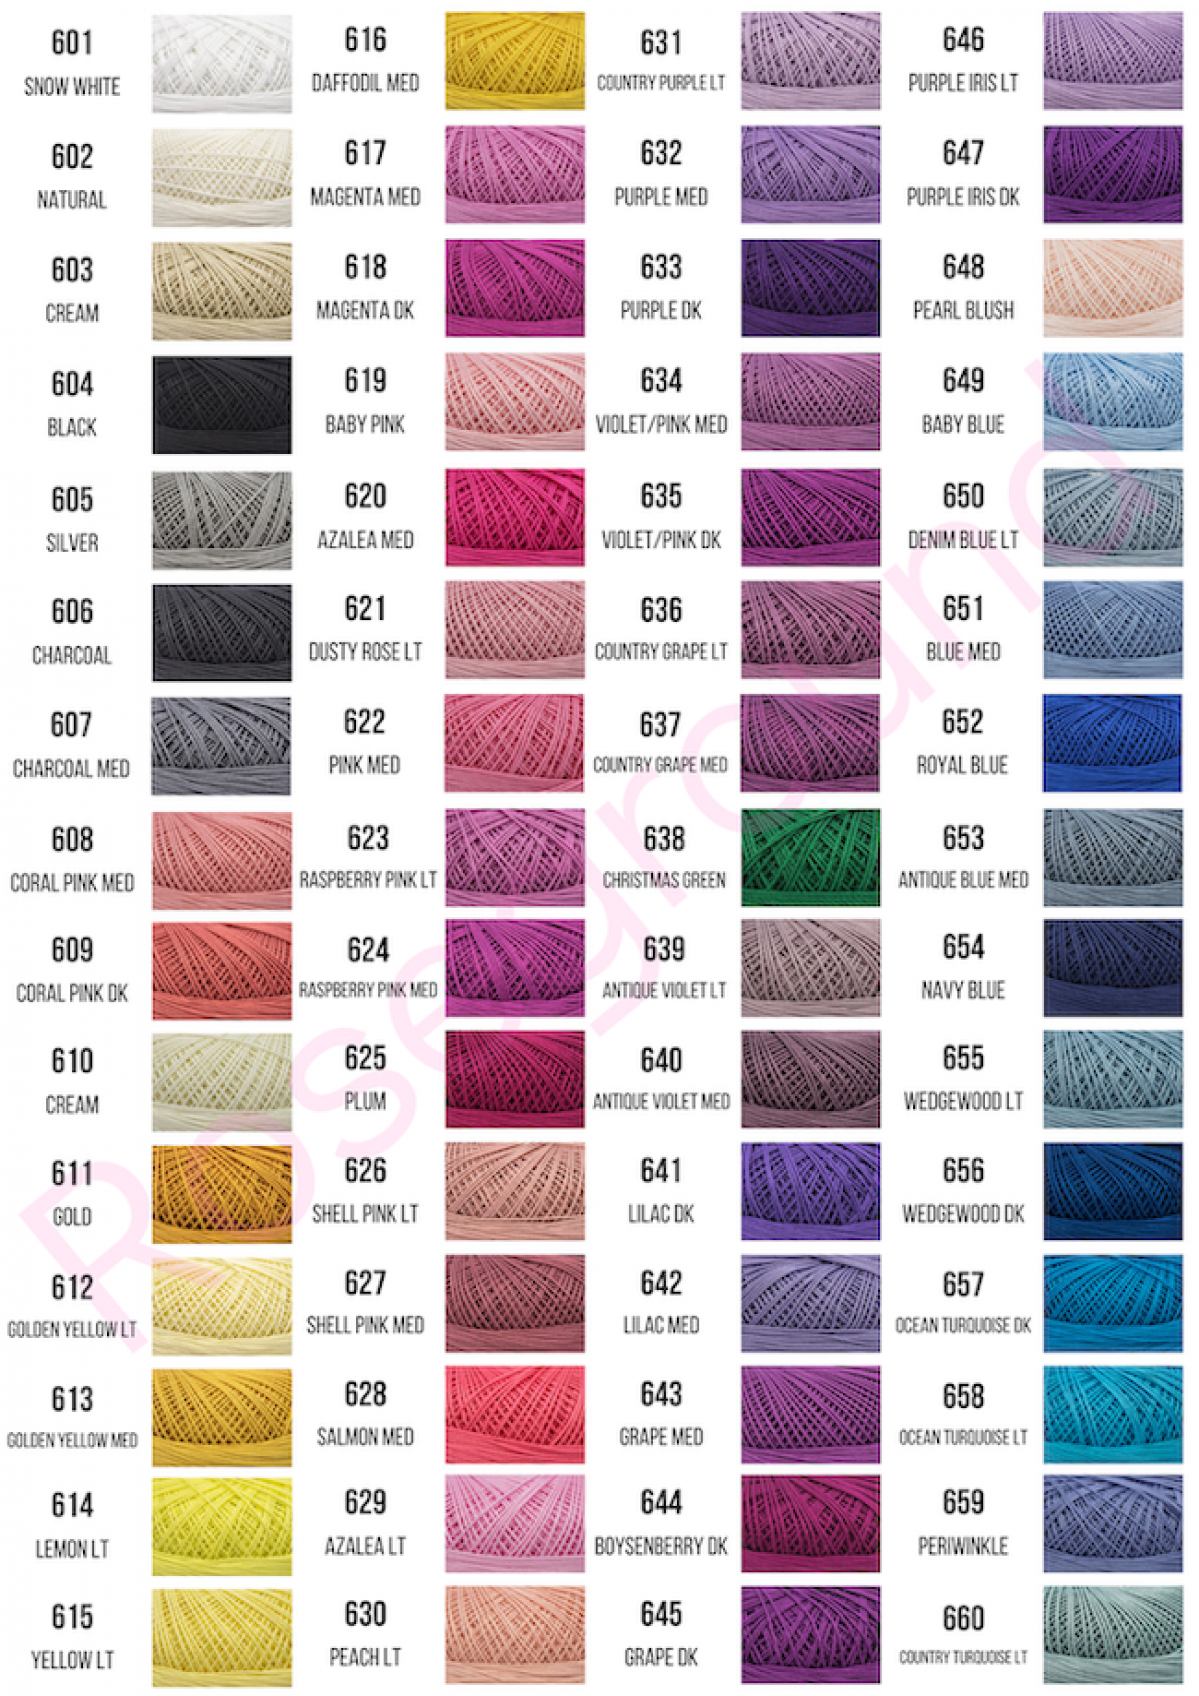 Lizbeth Egyptian Cotton Crochet Thread Size 80 Color 164 Blue River Glades